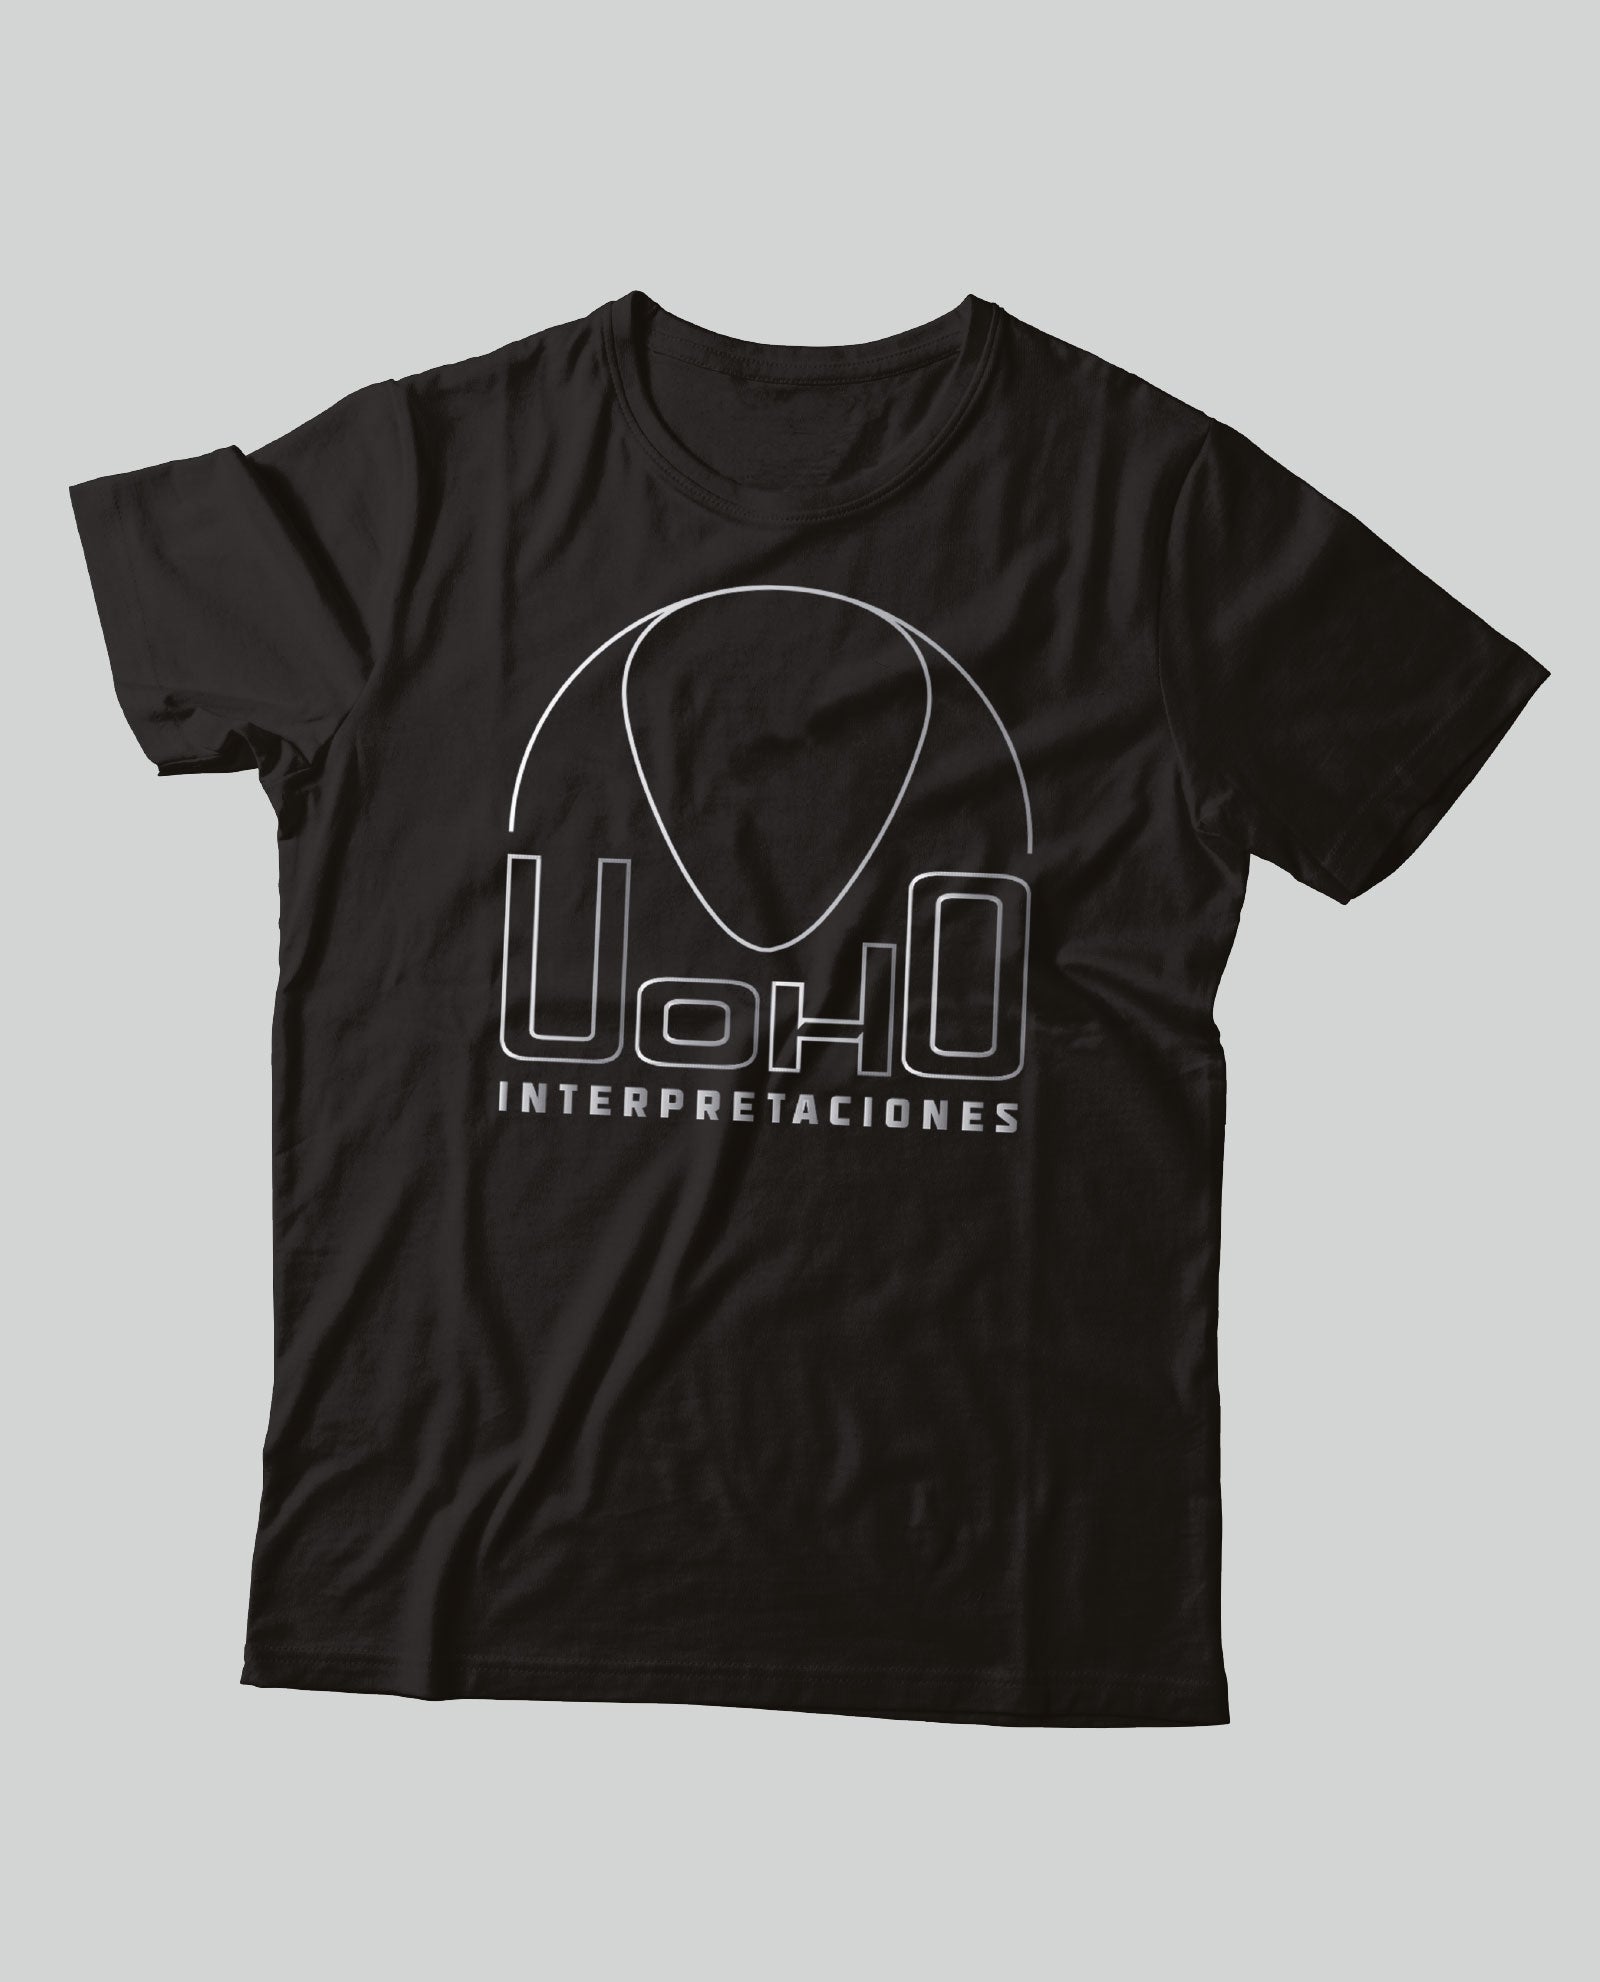 Camiseta "Interpretaciones" Negra - UOHO - Rocktud - Uoho